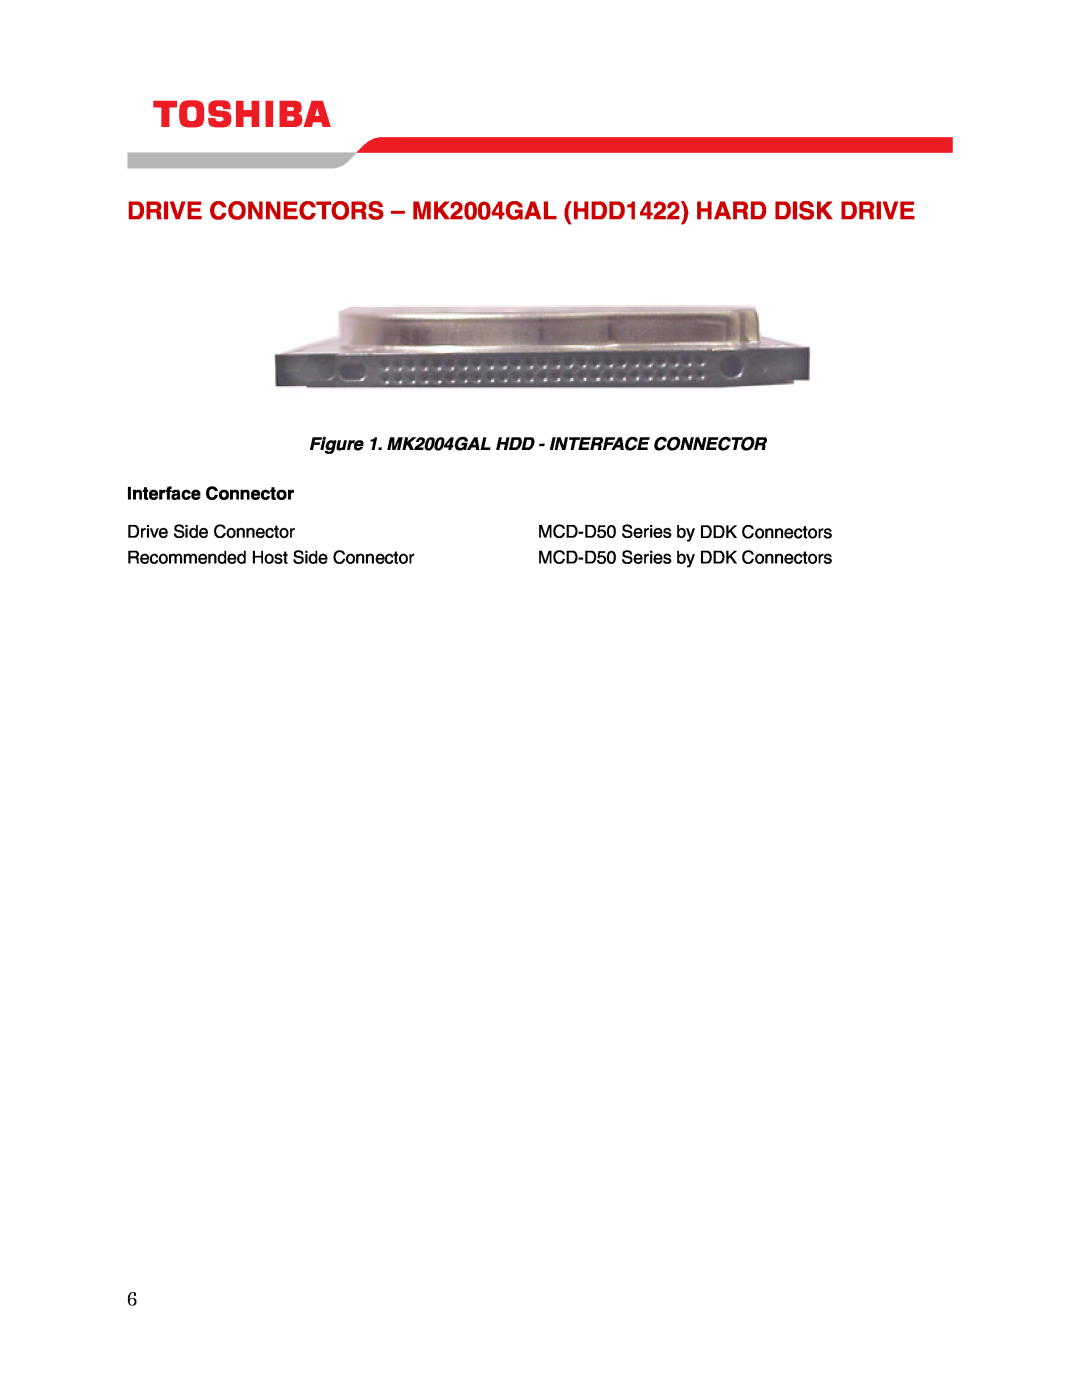 Toshiba DRIVE CONNECTORS - MK2004GAL HDD1422 HARD DISK DRIVE, MK2004GAL HDD - INTERFACE CONNECTOR, Interface Connector 